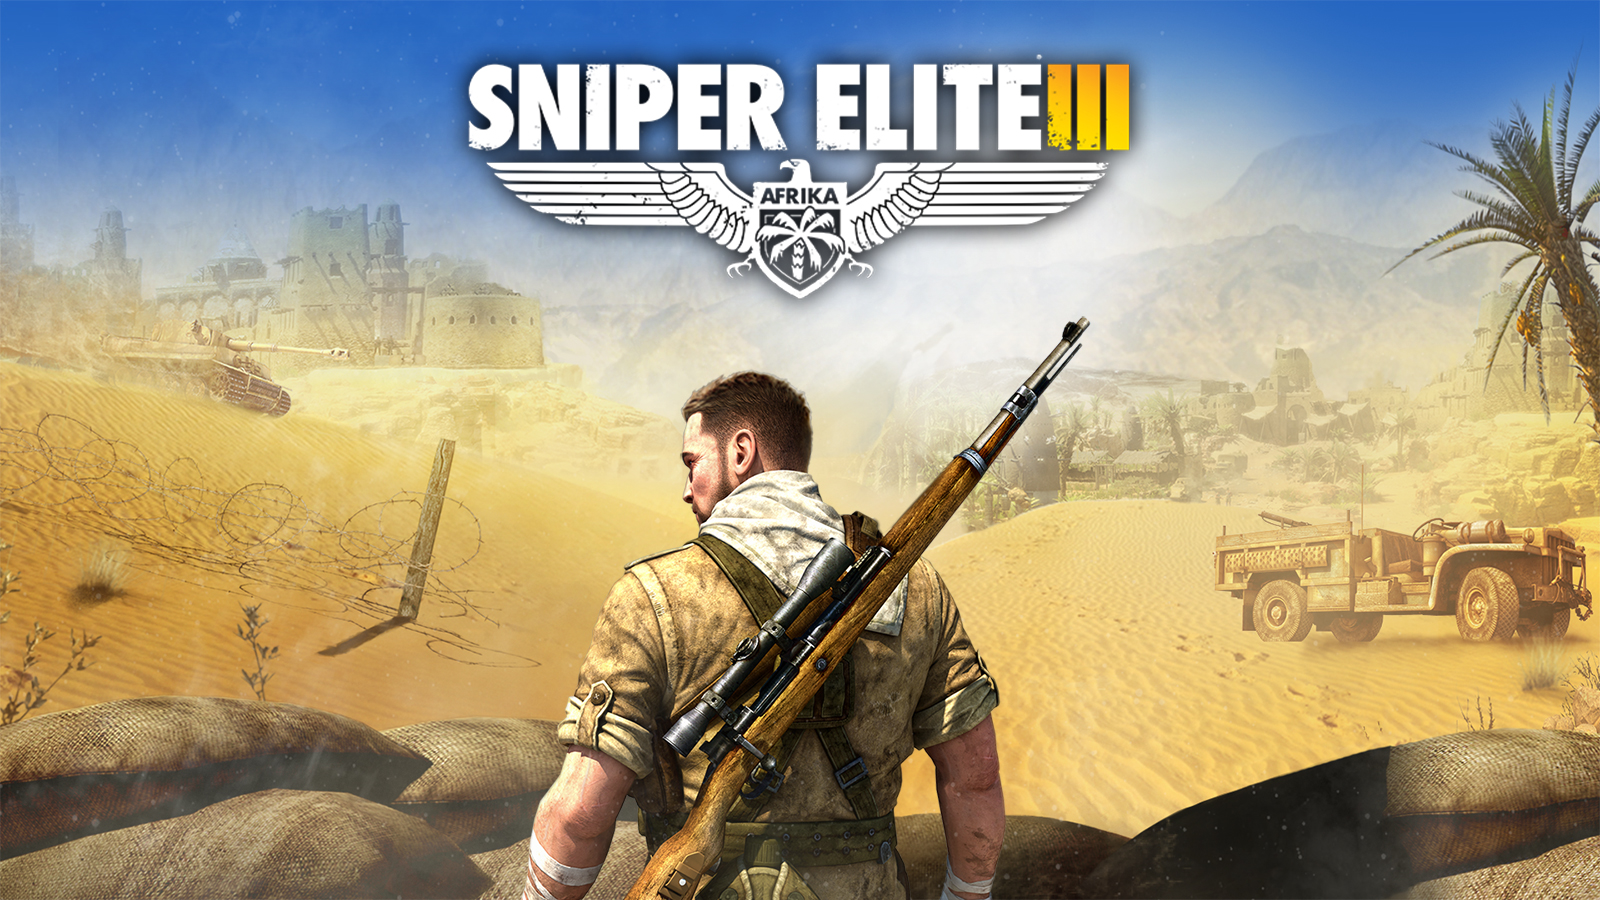 Sniper Elite 3 Wallpapers 4K 1600x900 px   4USkY